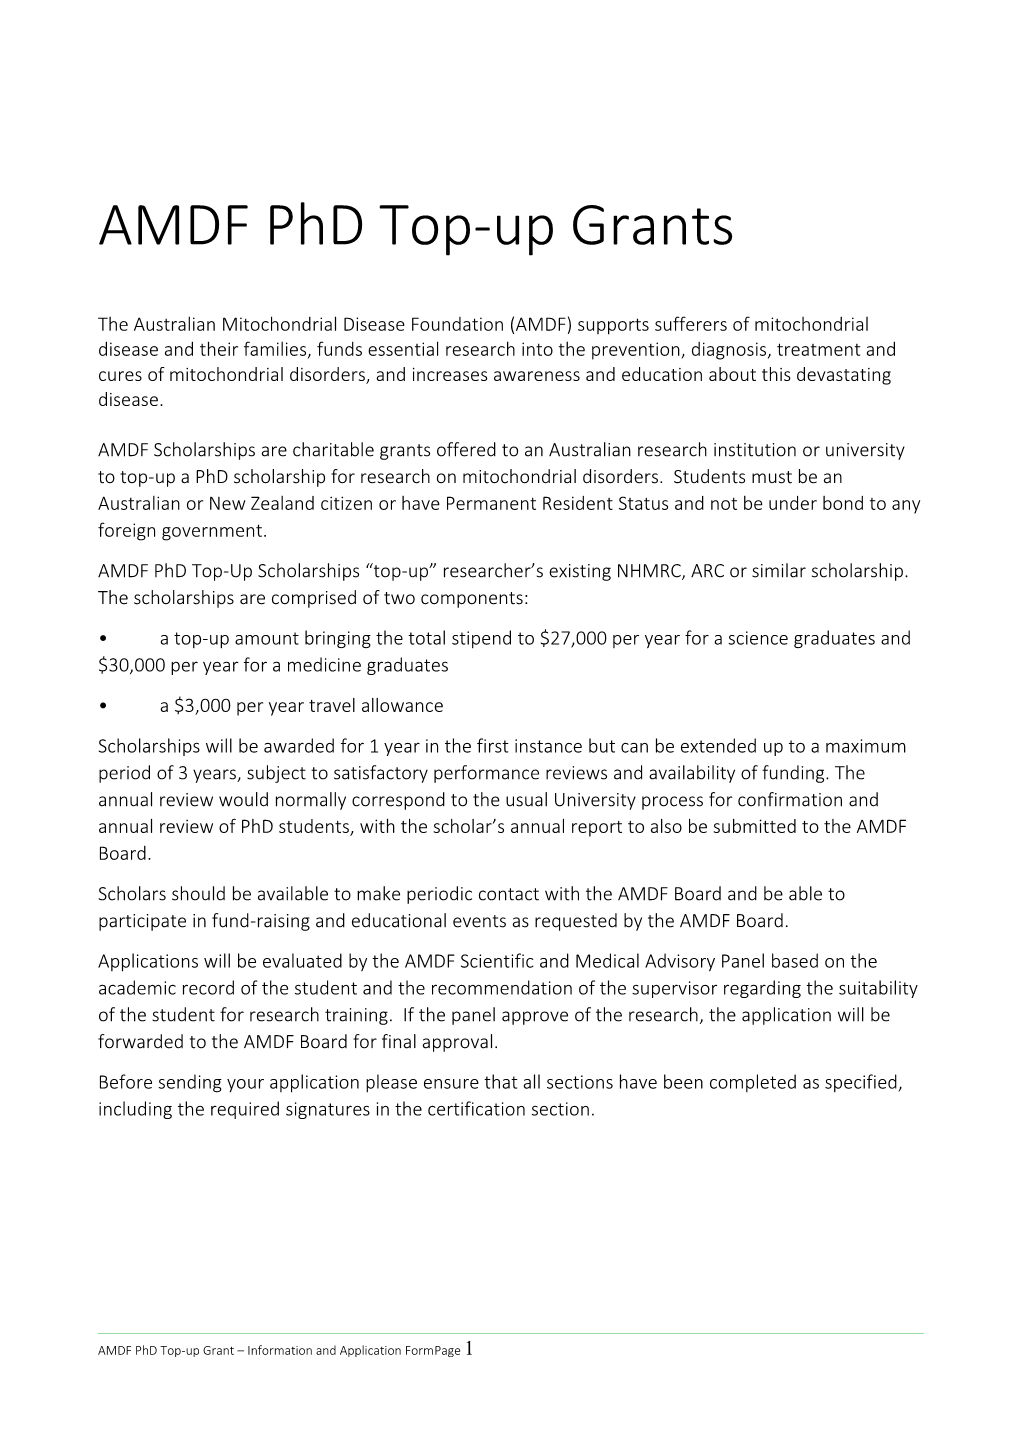 AMDF Phd Top-Up Grants